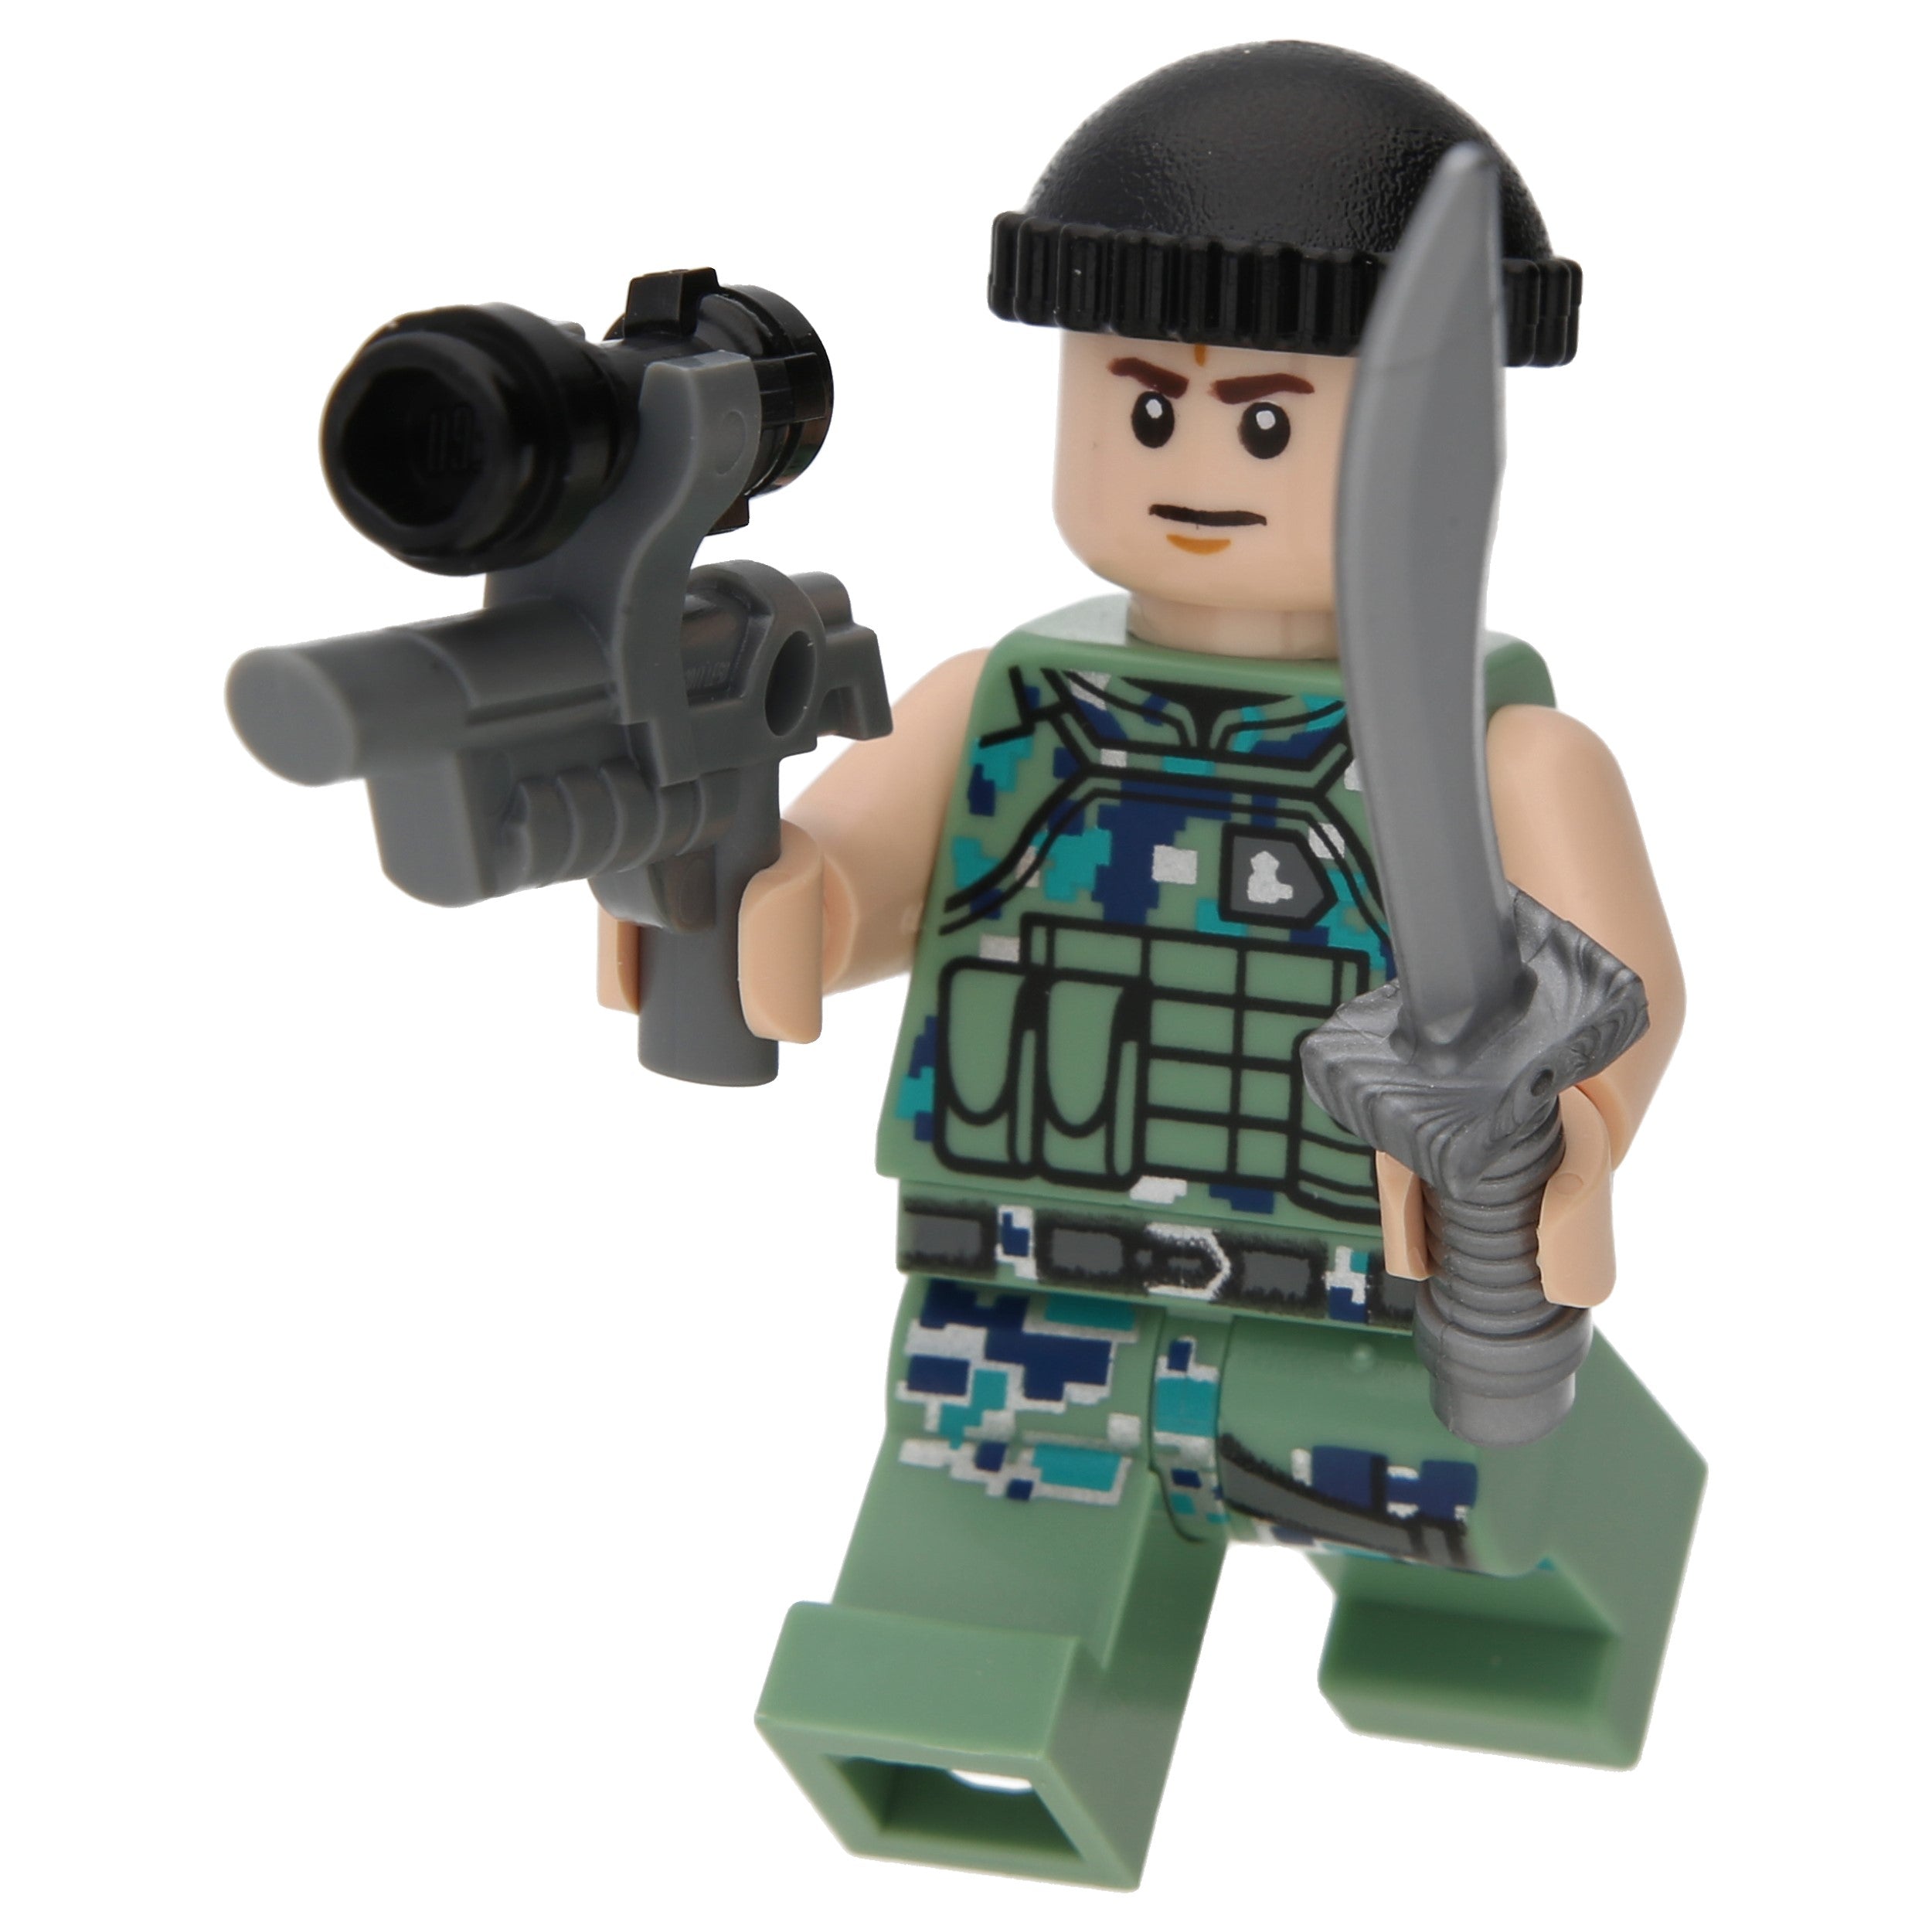 LEGO Avatar Minifigures - RDA Crab Suit Pilot with Gun - avt017 - Avatar: The Way of Water